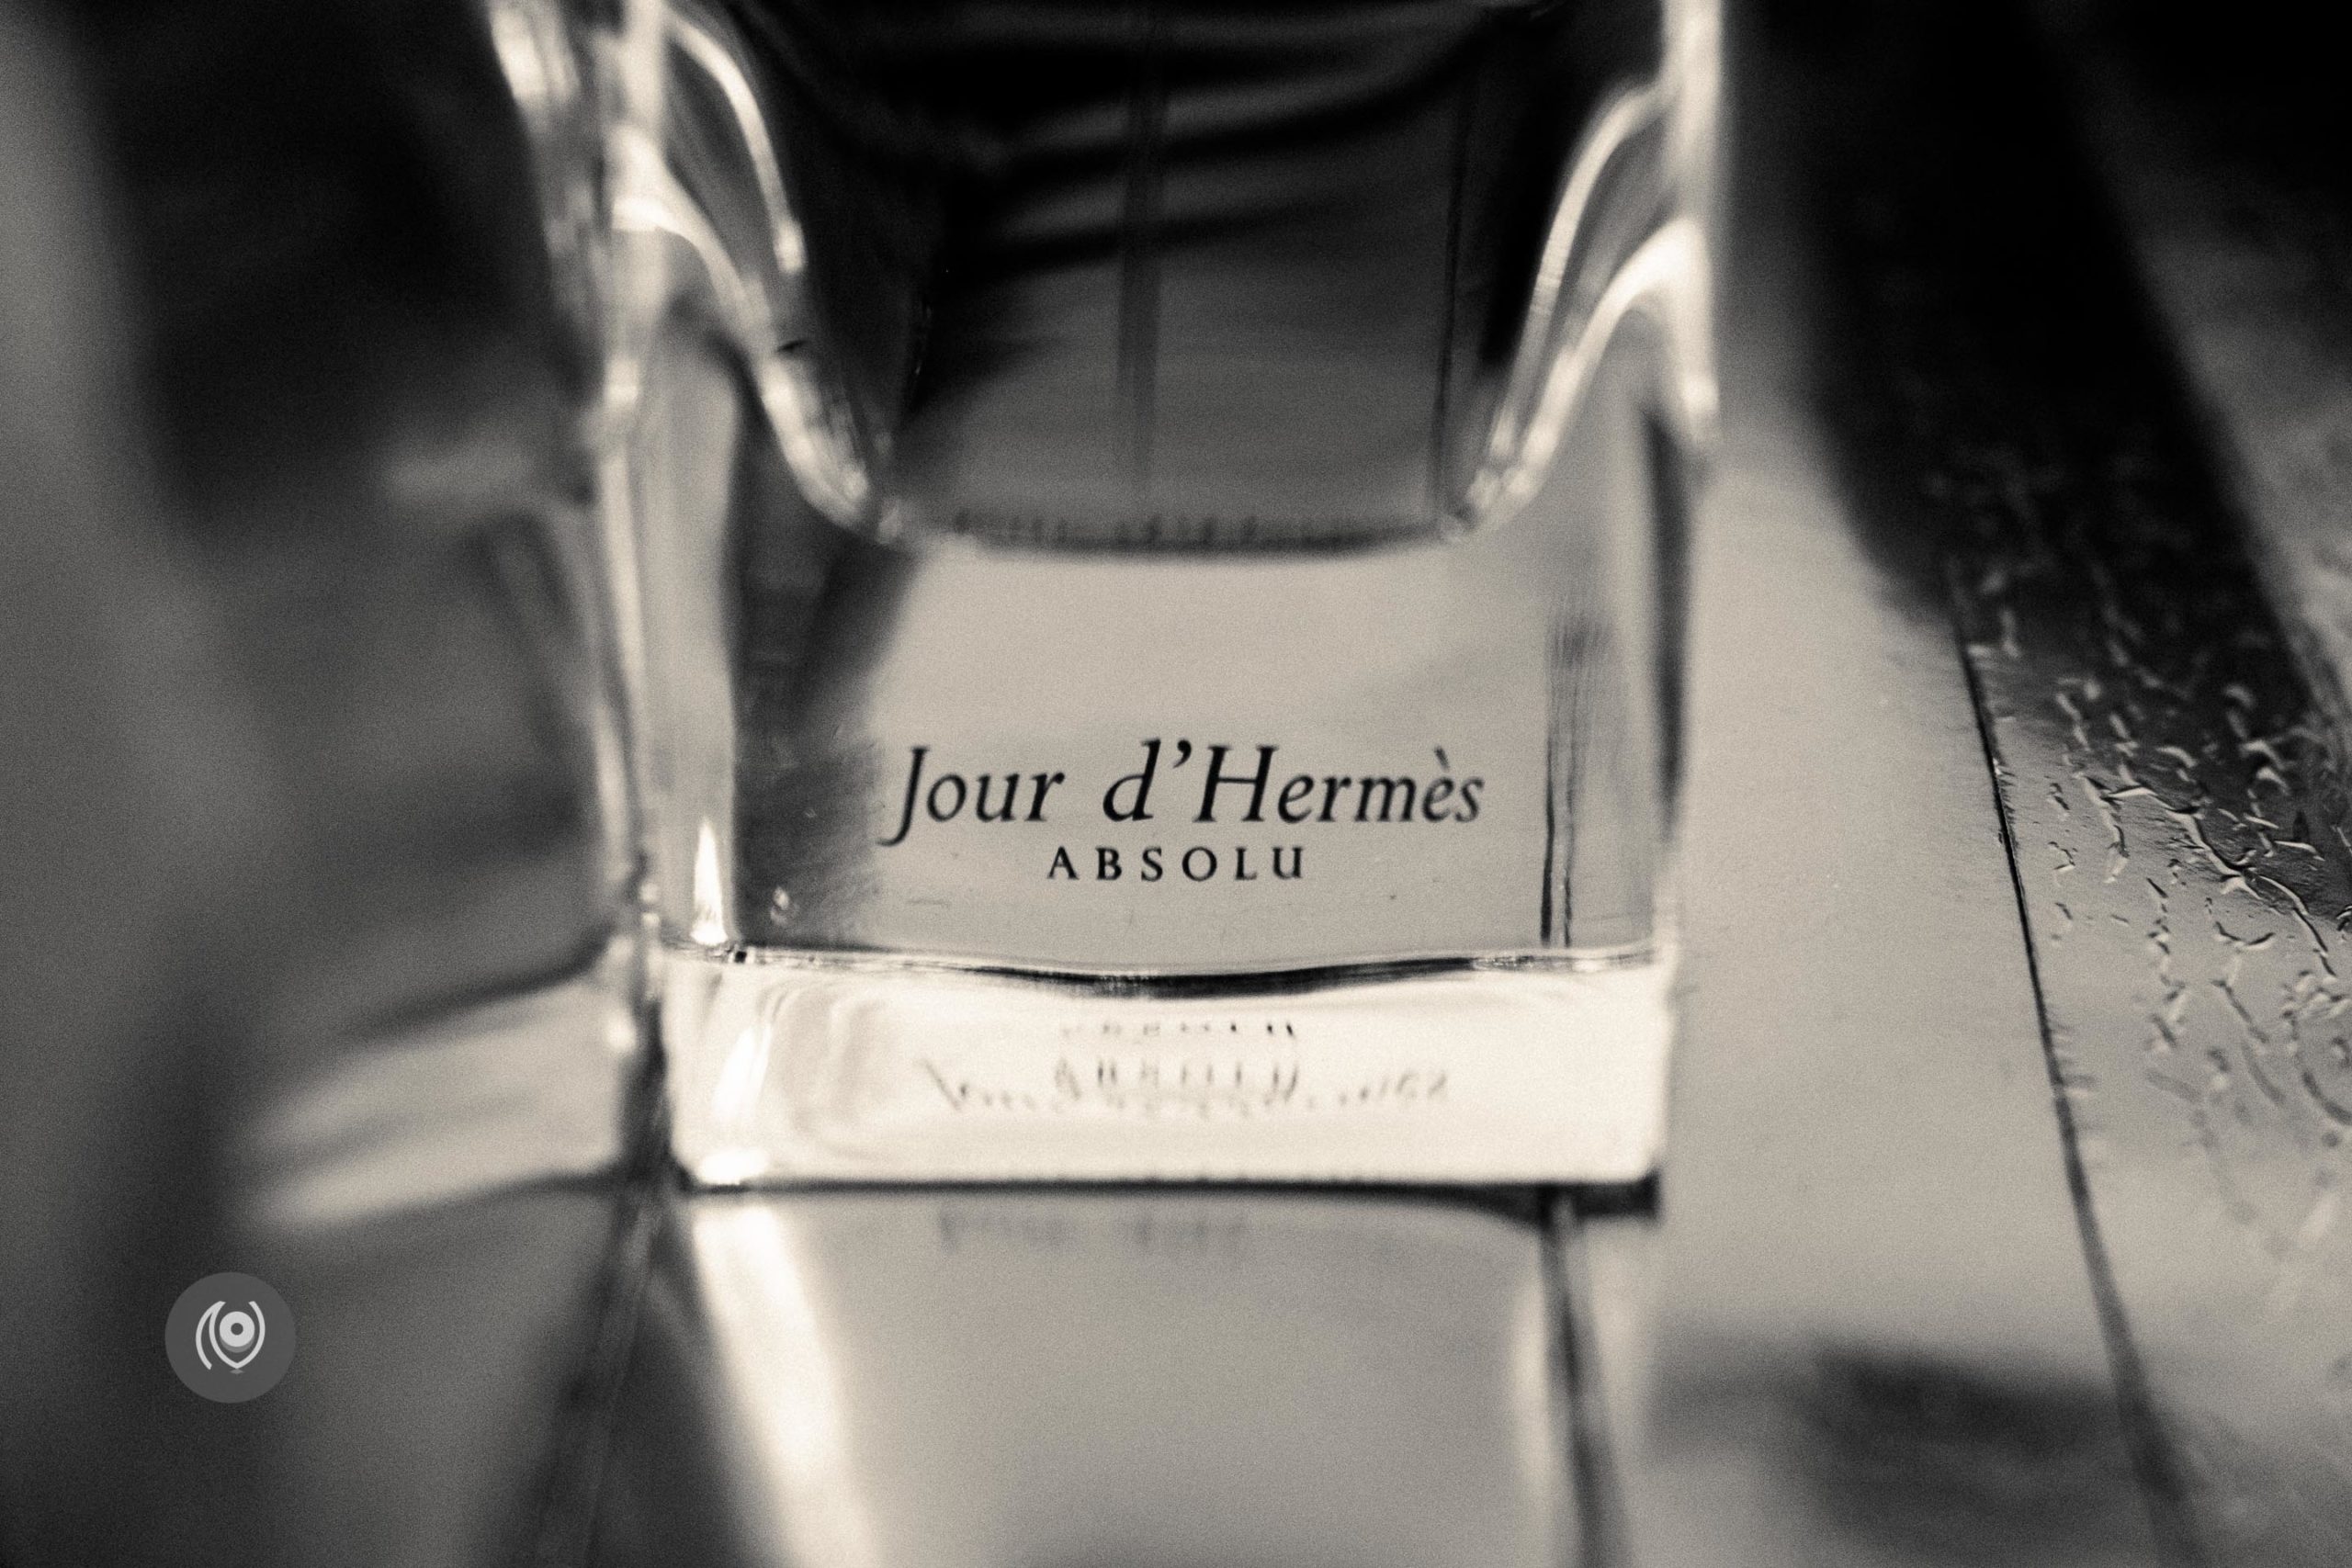 Jour d'Hermes Absolu Parfum #EyesForLuxury Naina.co Luxury & Lifestyle, Photographer, Storyteller, Blogger